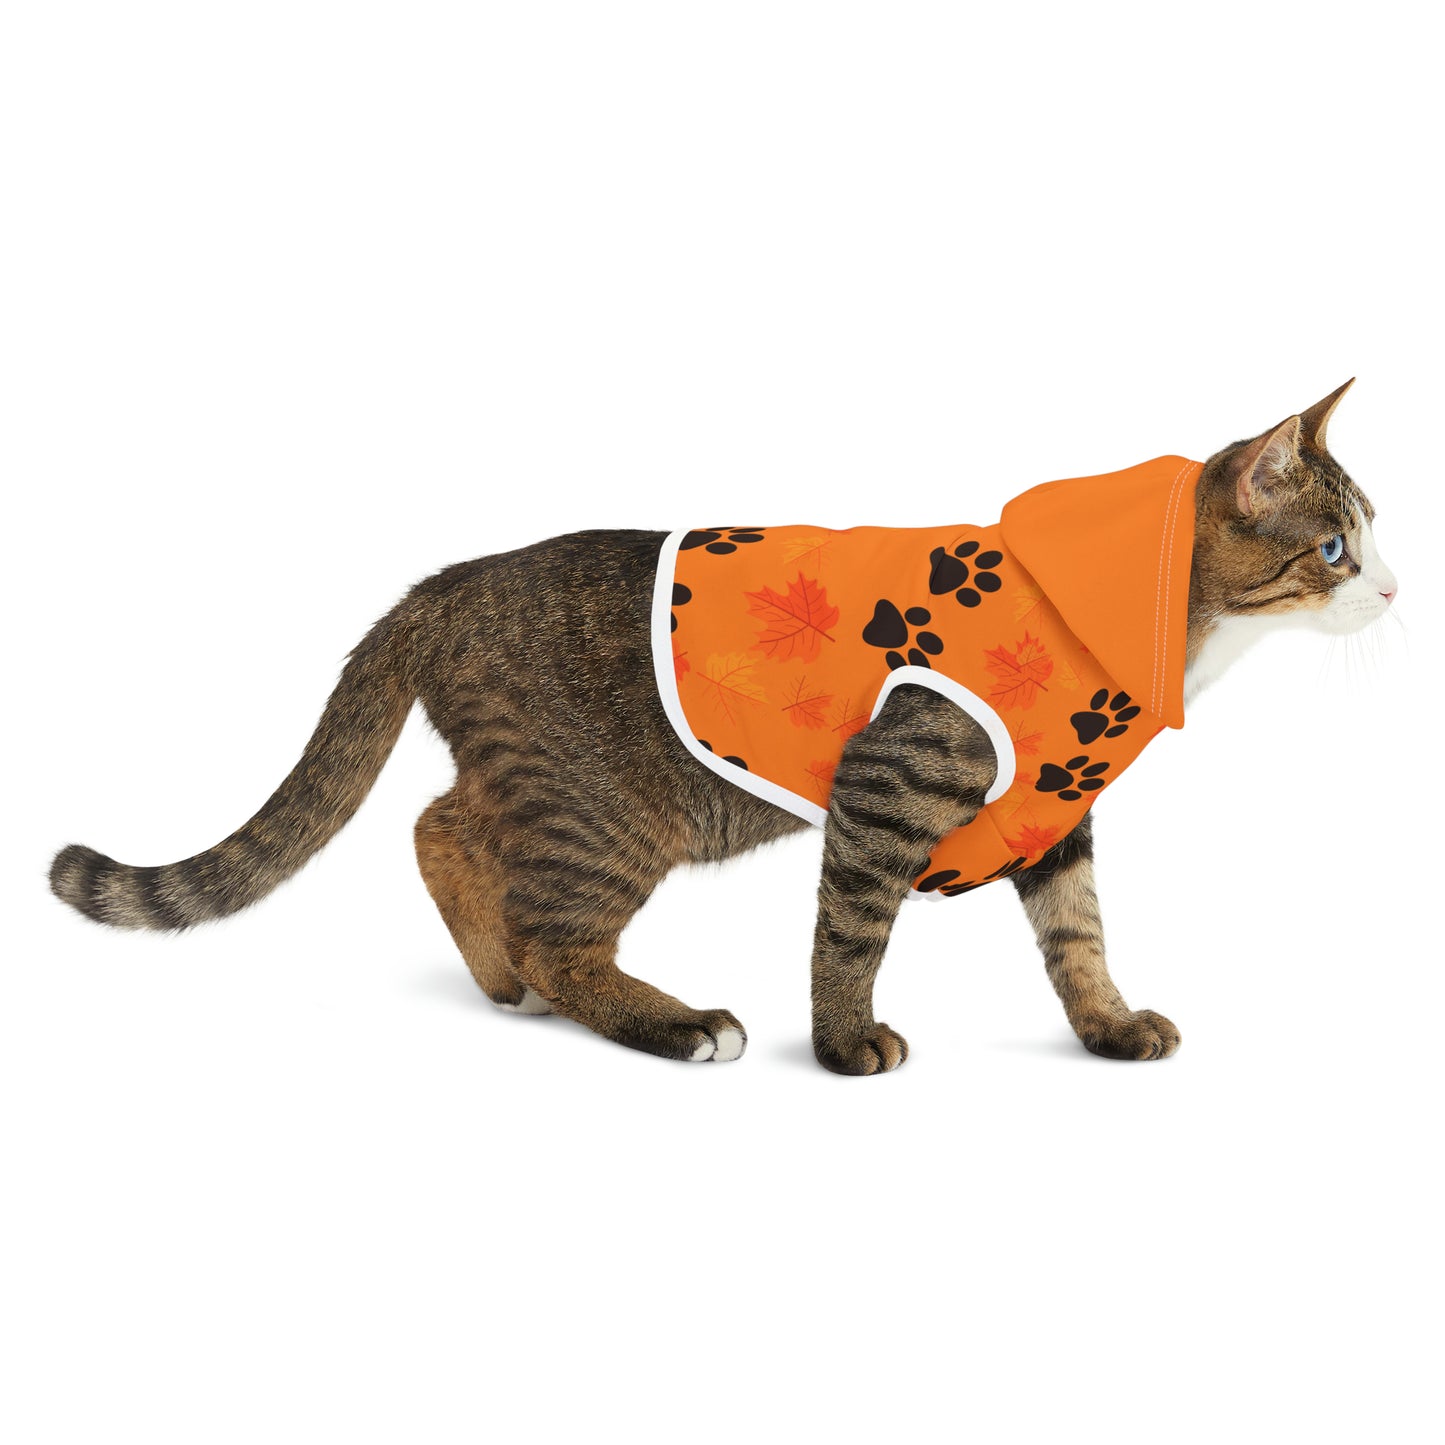 Dog Hoodie - Fall Collection (Light Orange - With Light Orange Hood)